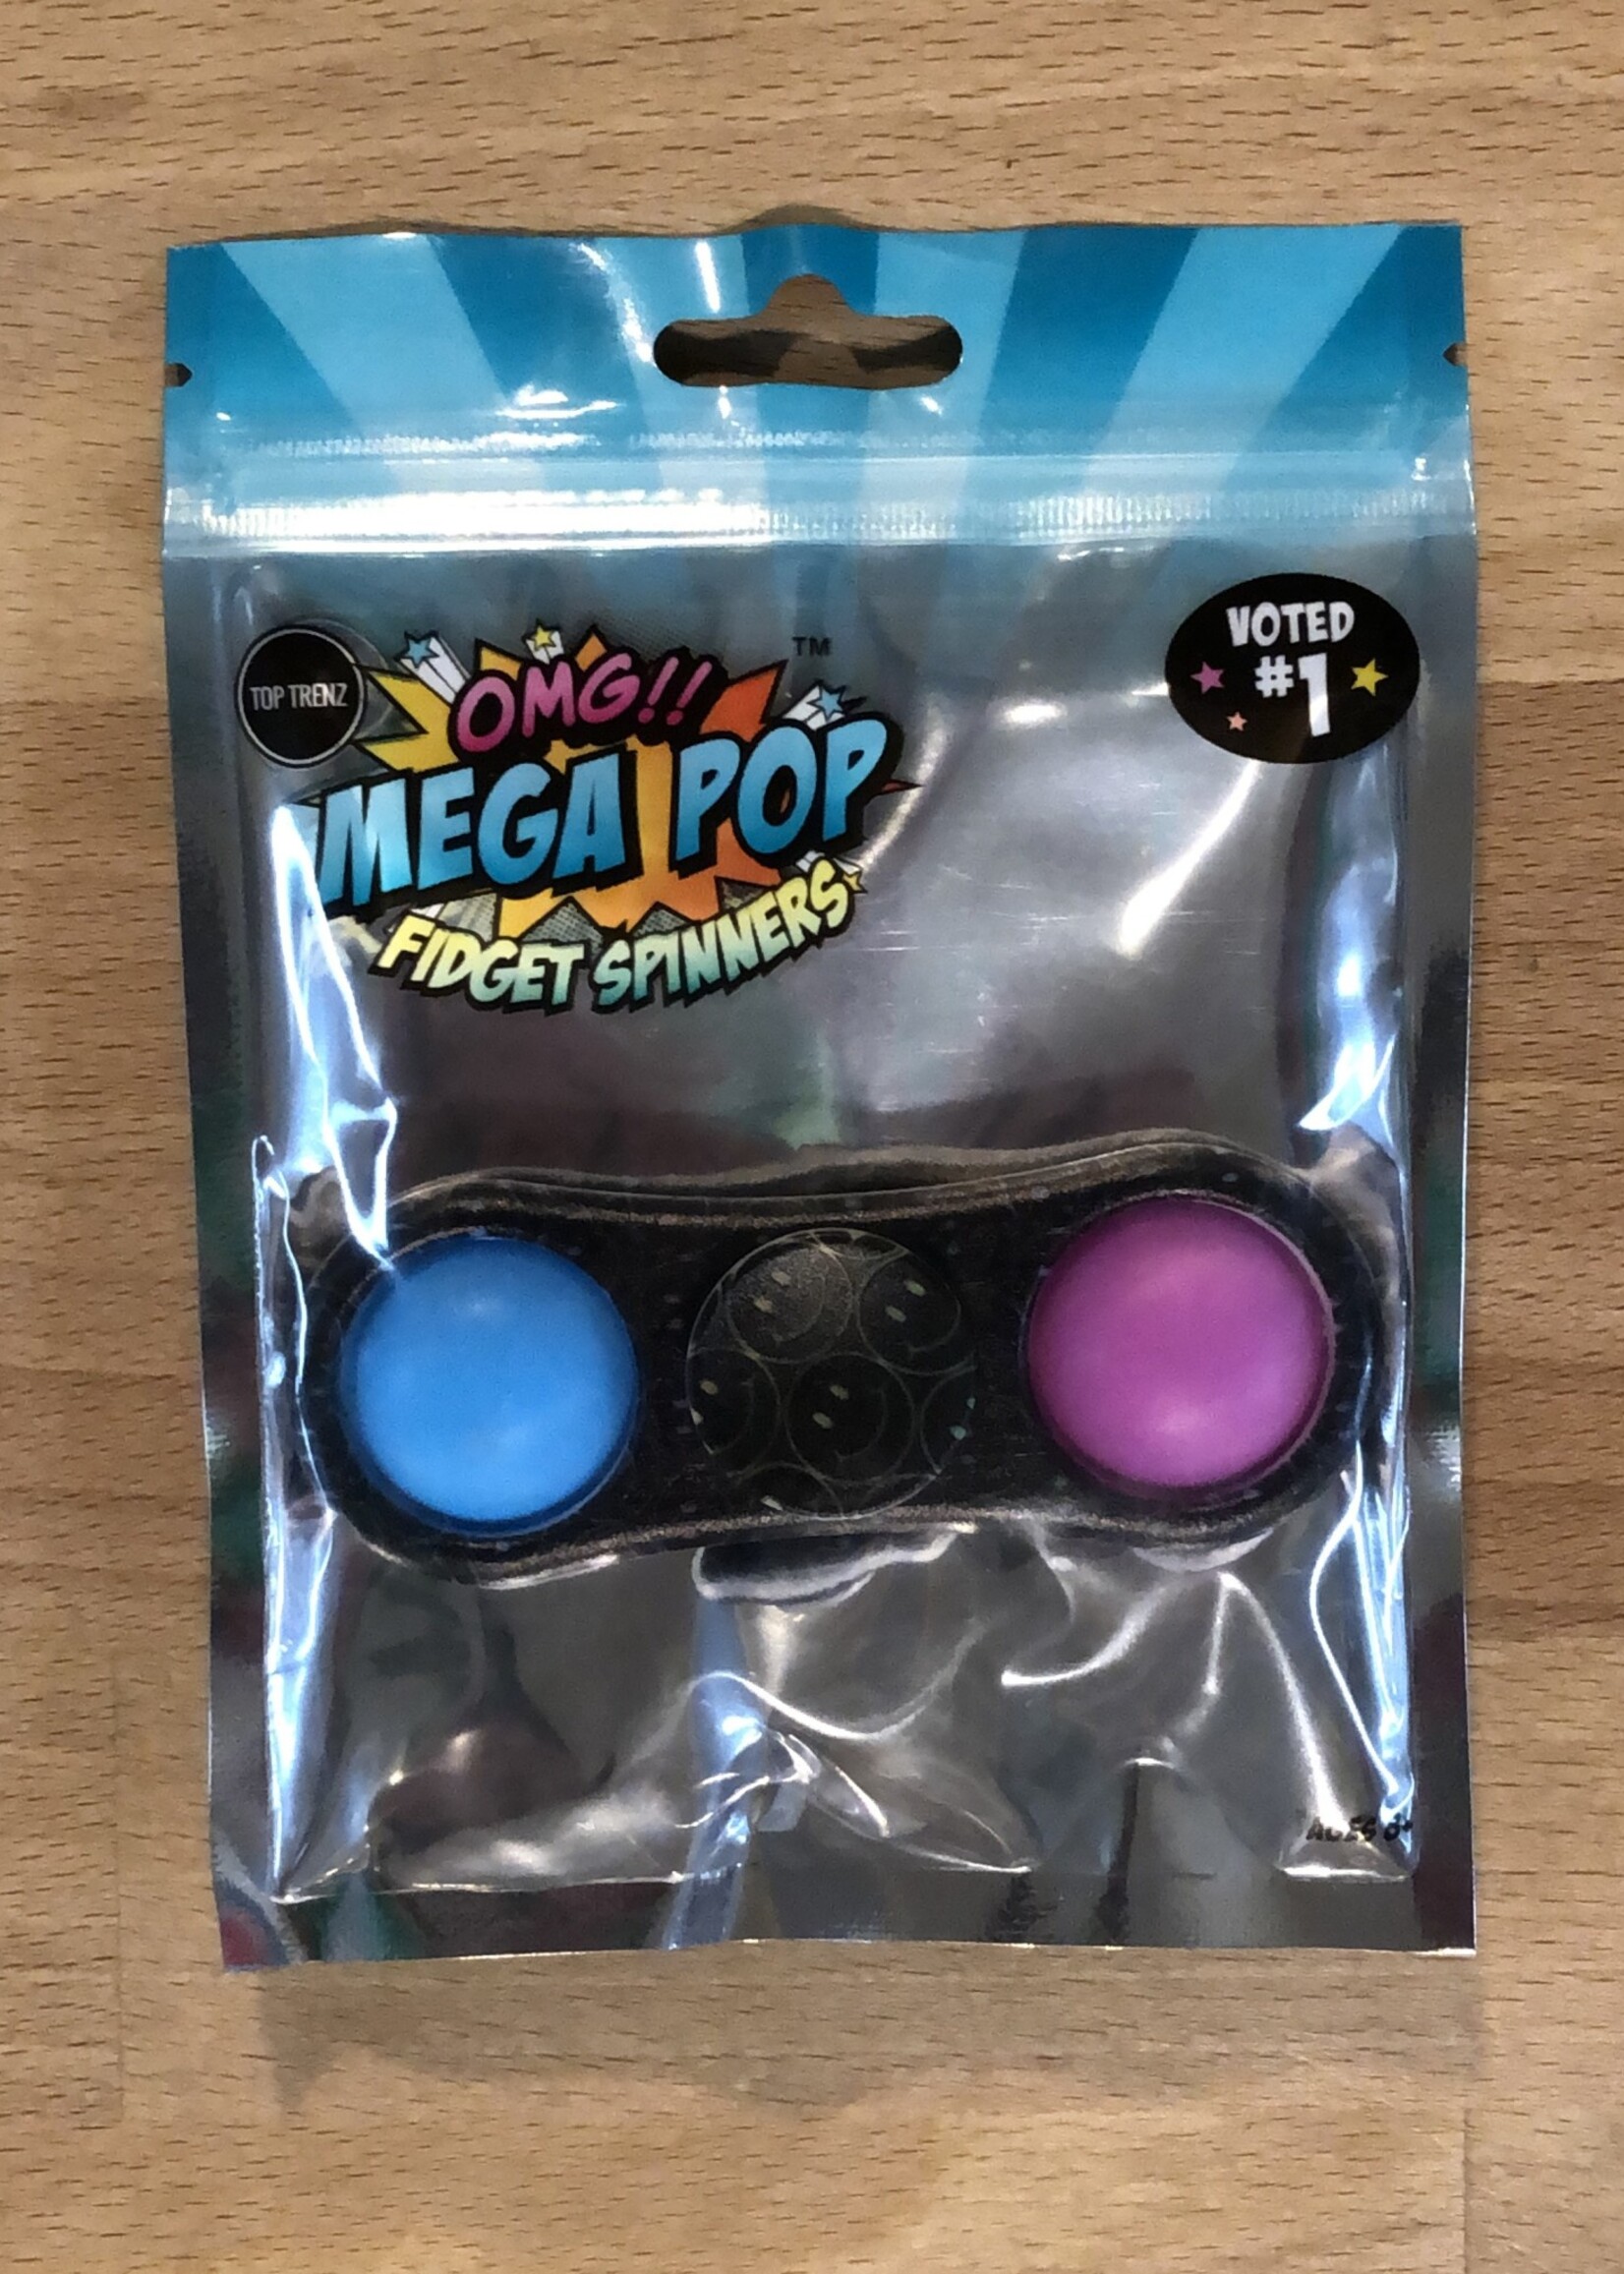 OMG! Mega Pop Fidget Spinner